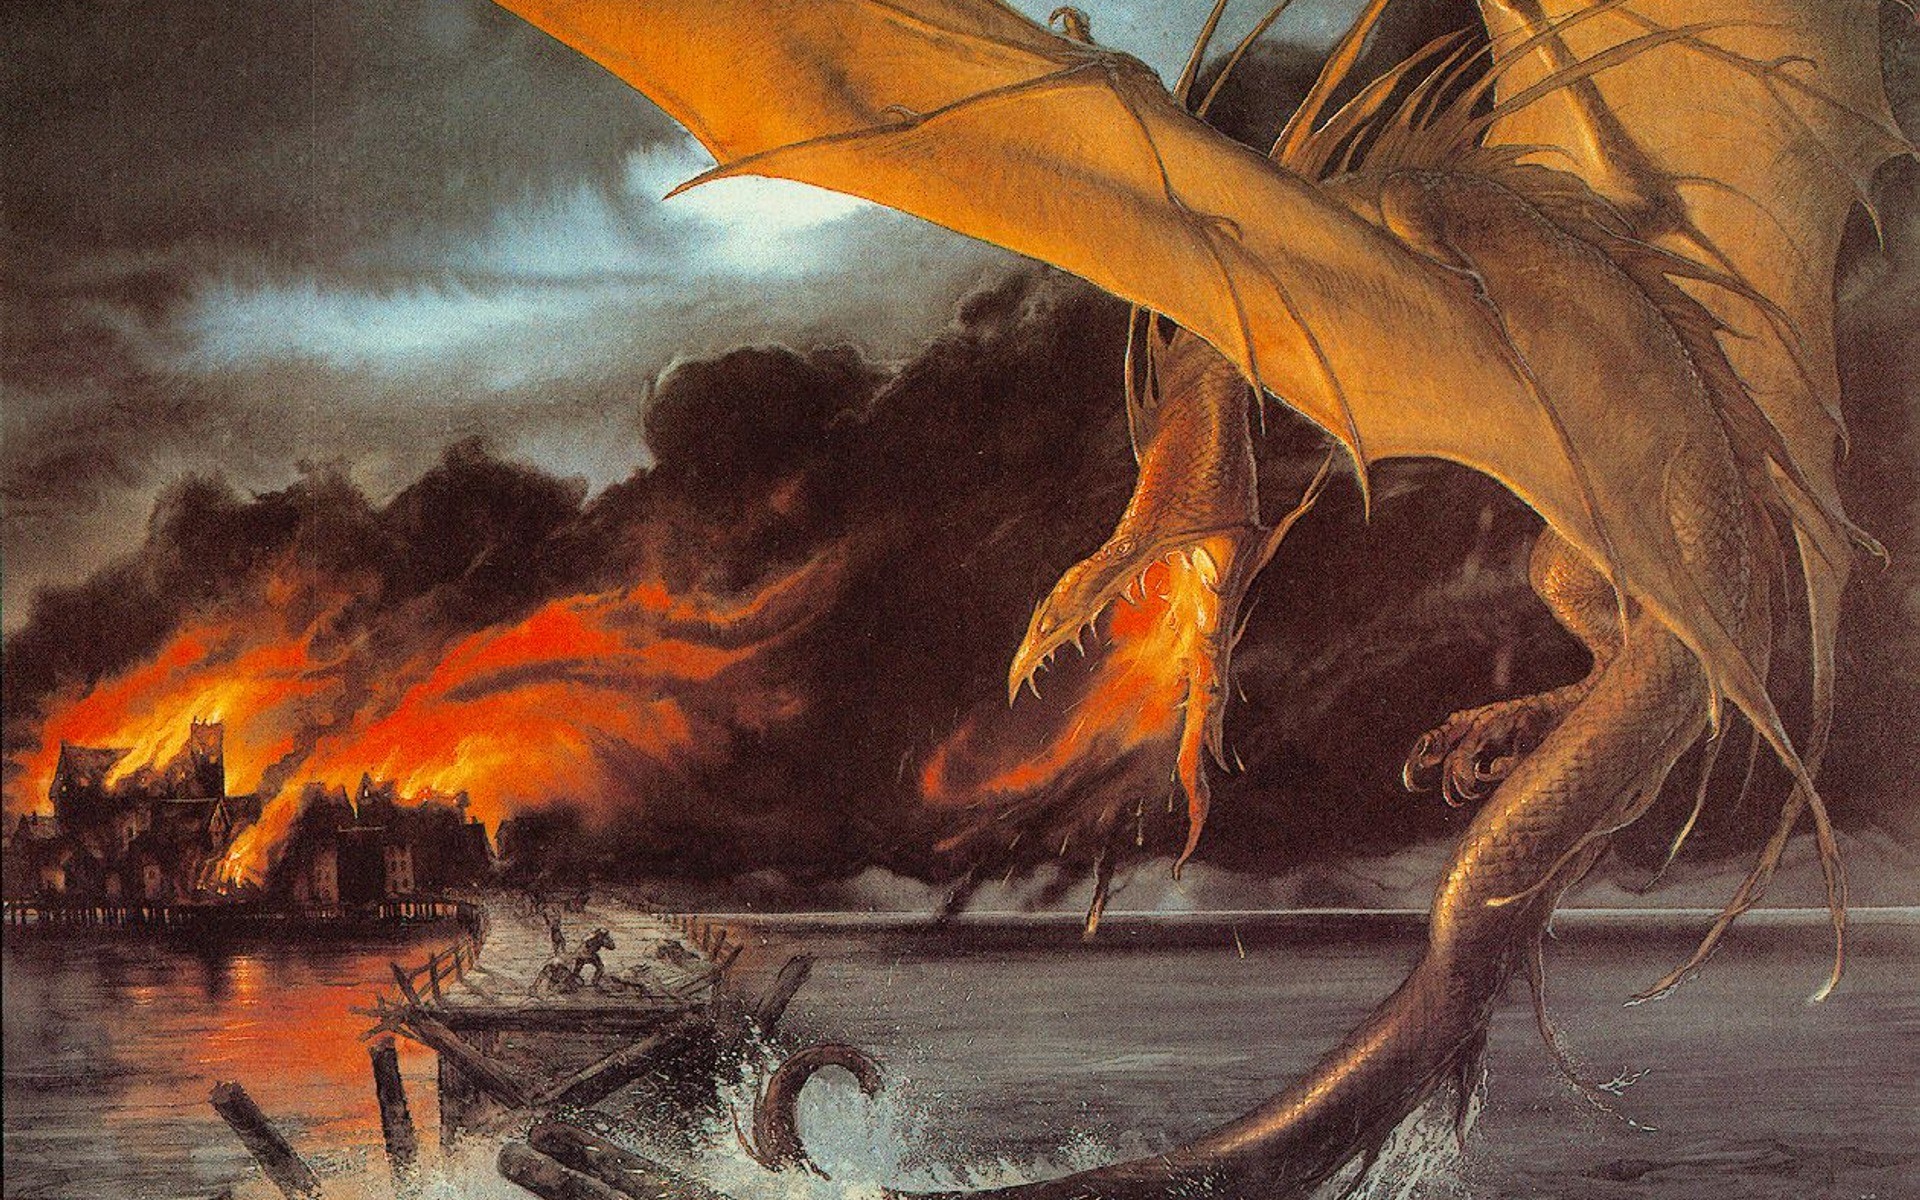 The Hobbit Smaug Dragon Fantasy Art 1920x1200